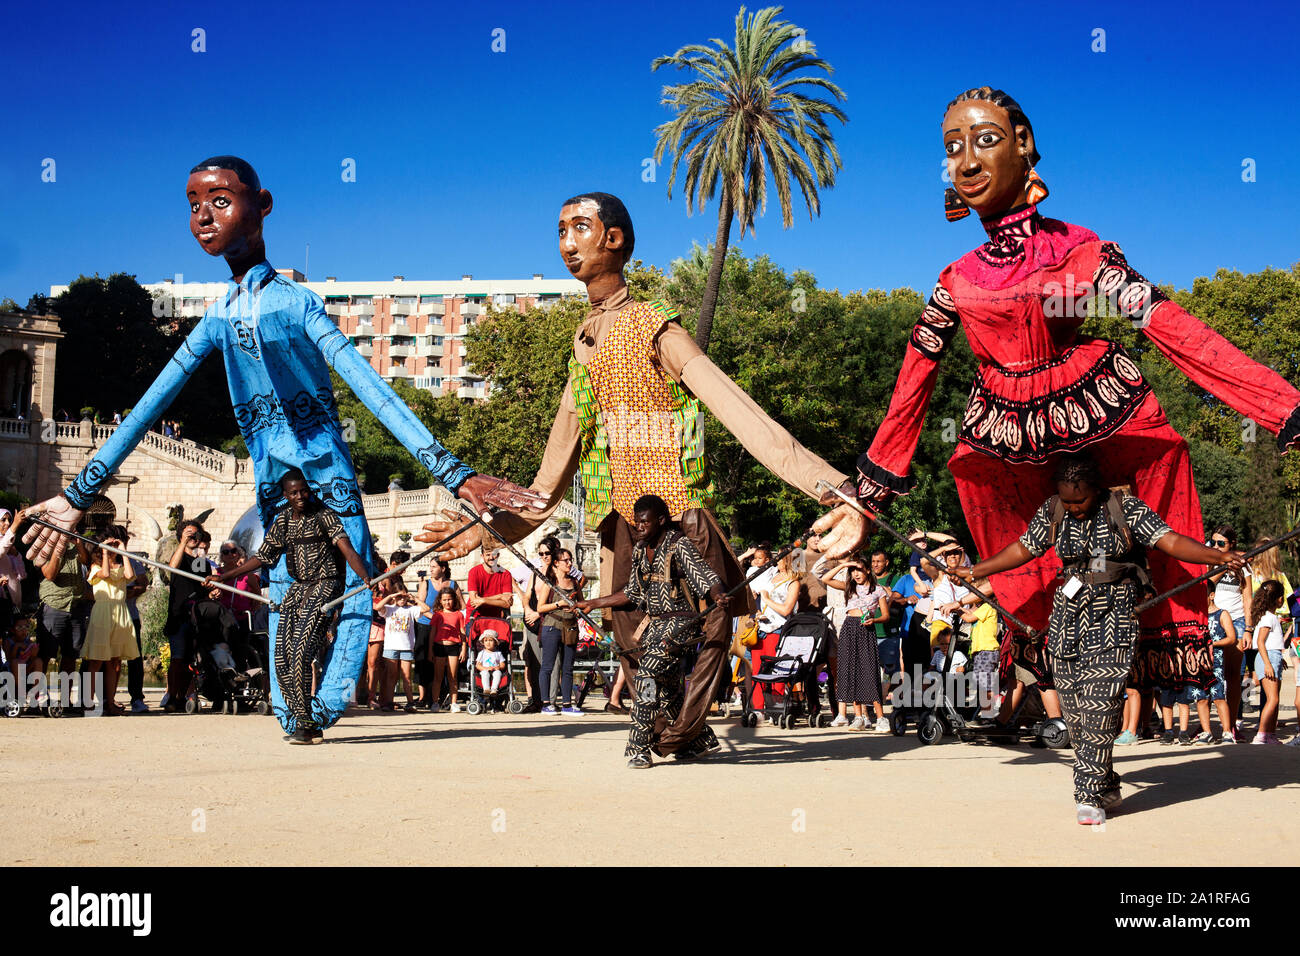 Malawische riesige Marionetten tanzen, Barcelona. Stockfoto